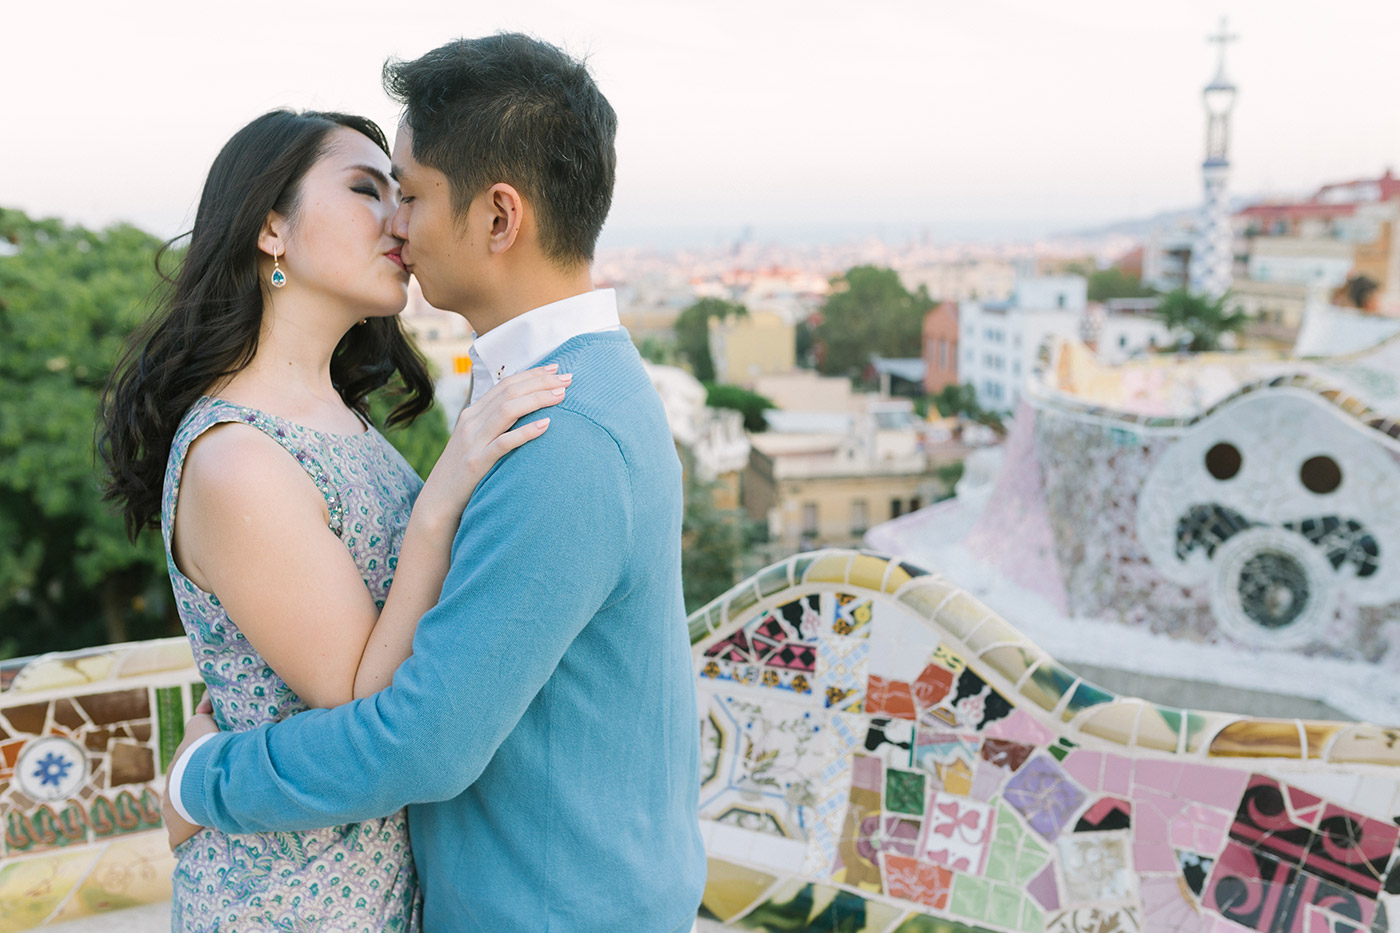 Lovely romantic couple| Elegant pre wedding photoshoot Barcelona |Engagement photographer Barcelona | Park Guell Engagement | Lena Karelova Photography